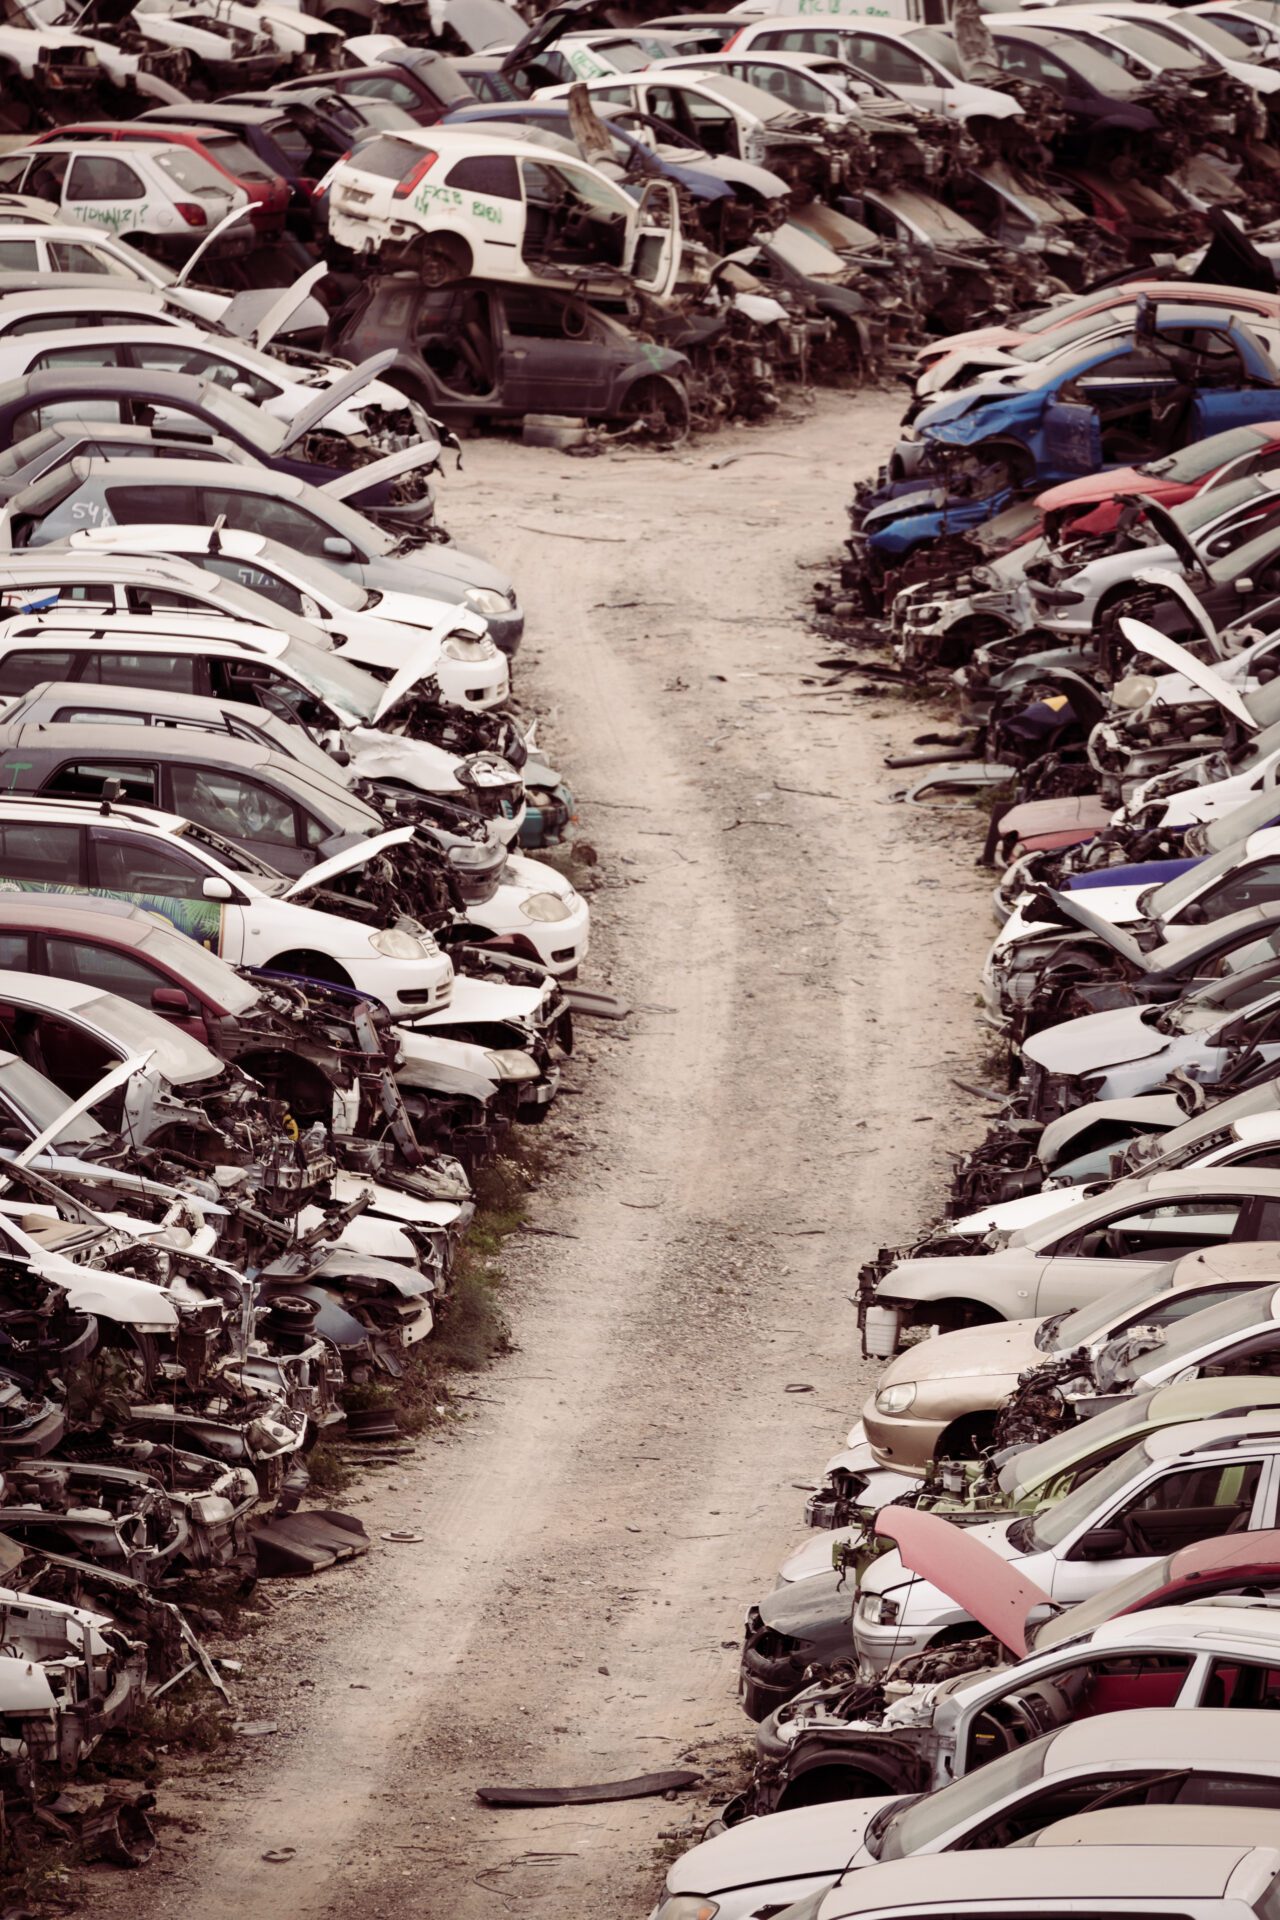 Car junkyard with many forgotten wrecks passenger cars.